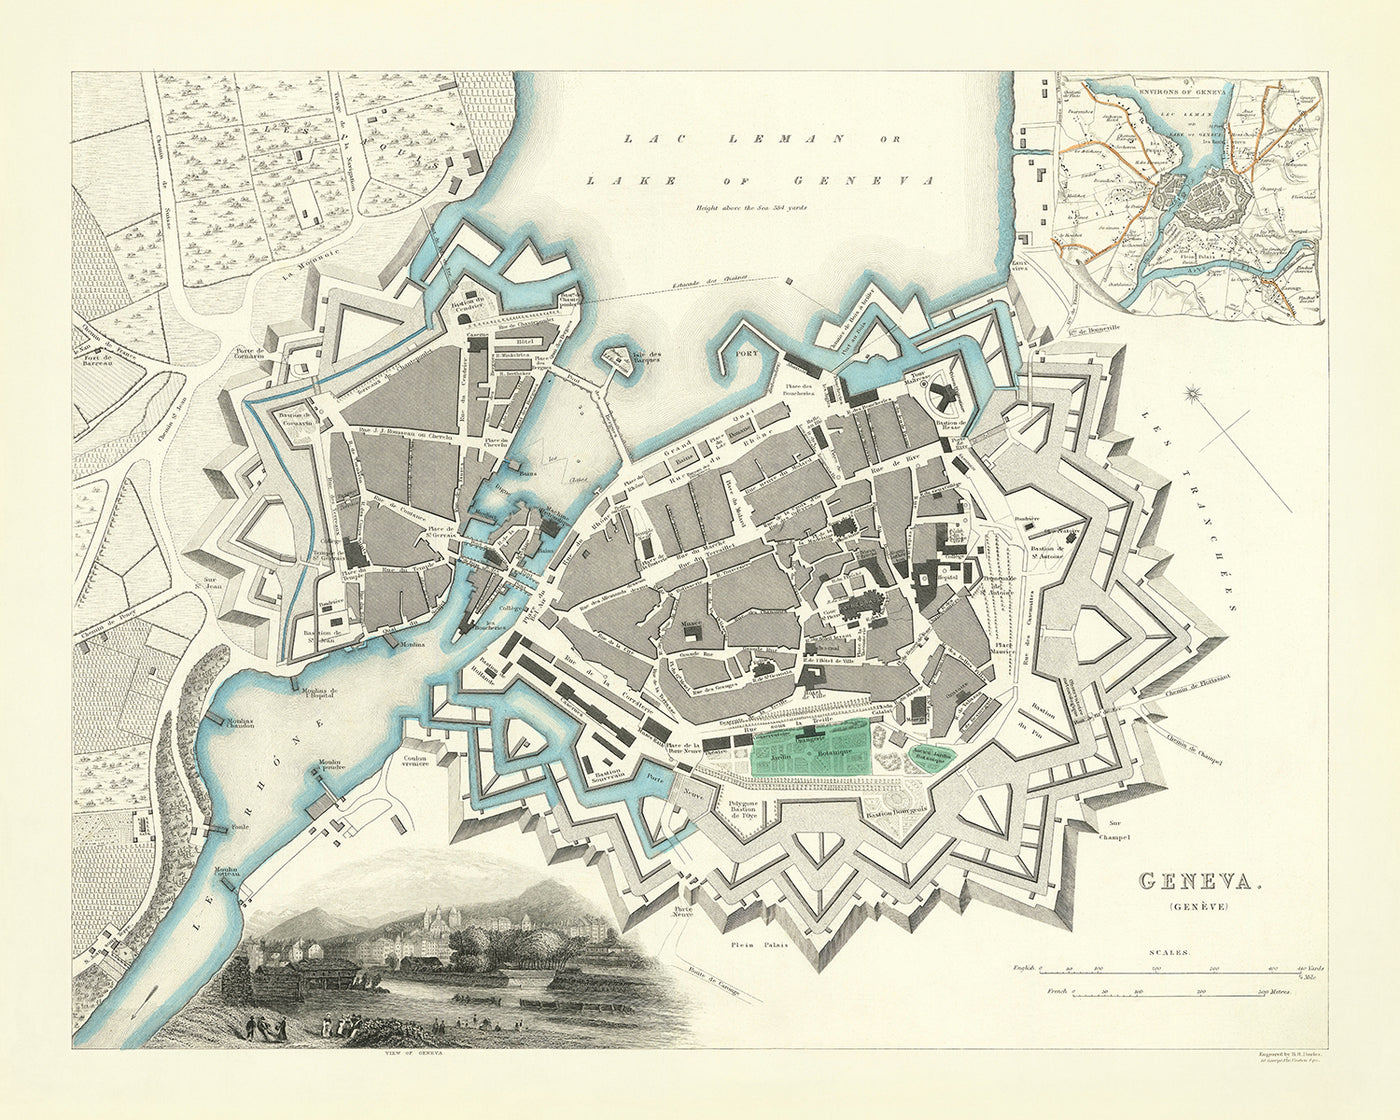 Old Map of Geneva by SDUK, 1870: Lake Geneva, Rhone River, Jardin Botanique, Massive Bastion Fort Fortifications